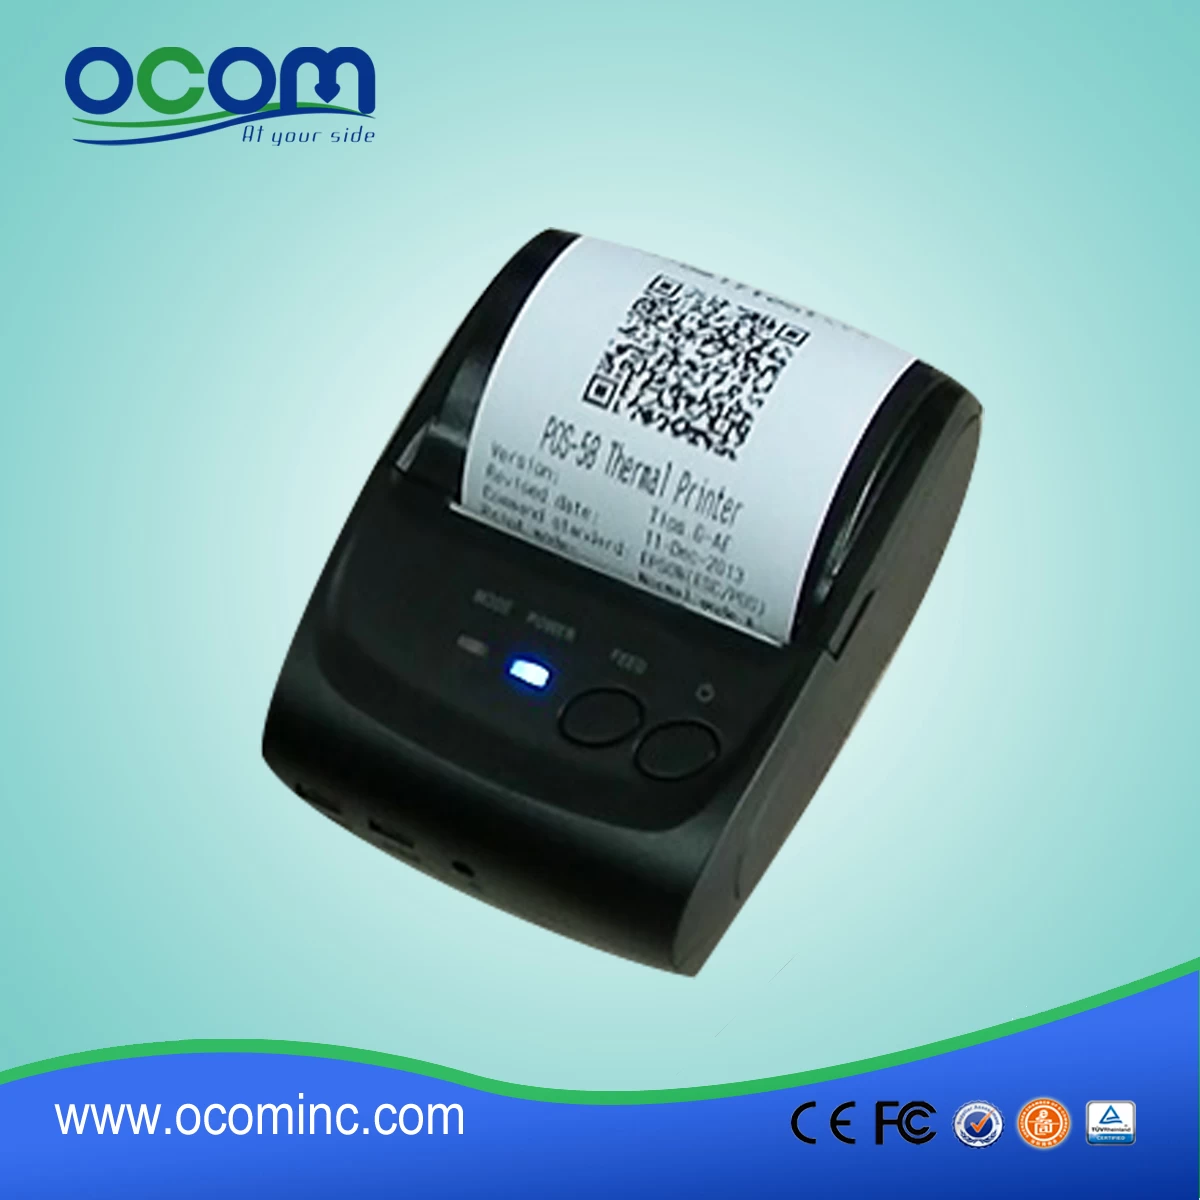 OCPP-M05: handheld bluetooth pocket printer, cheap thermal printer